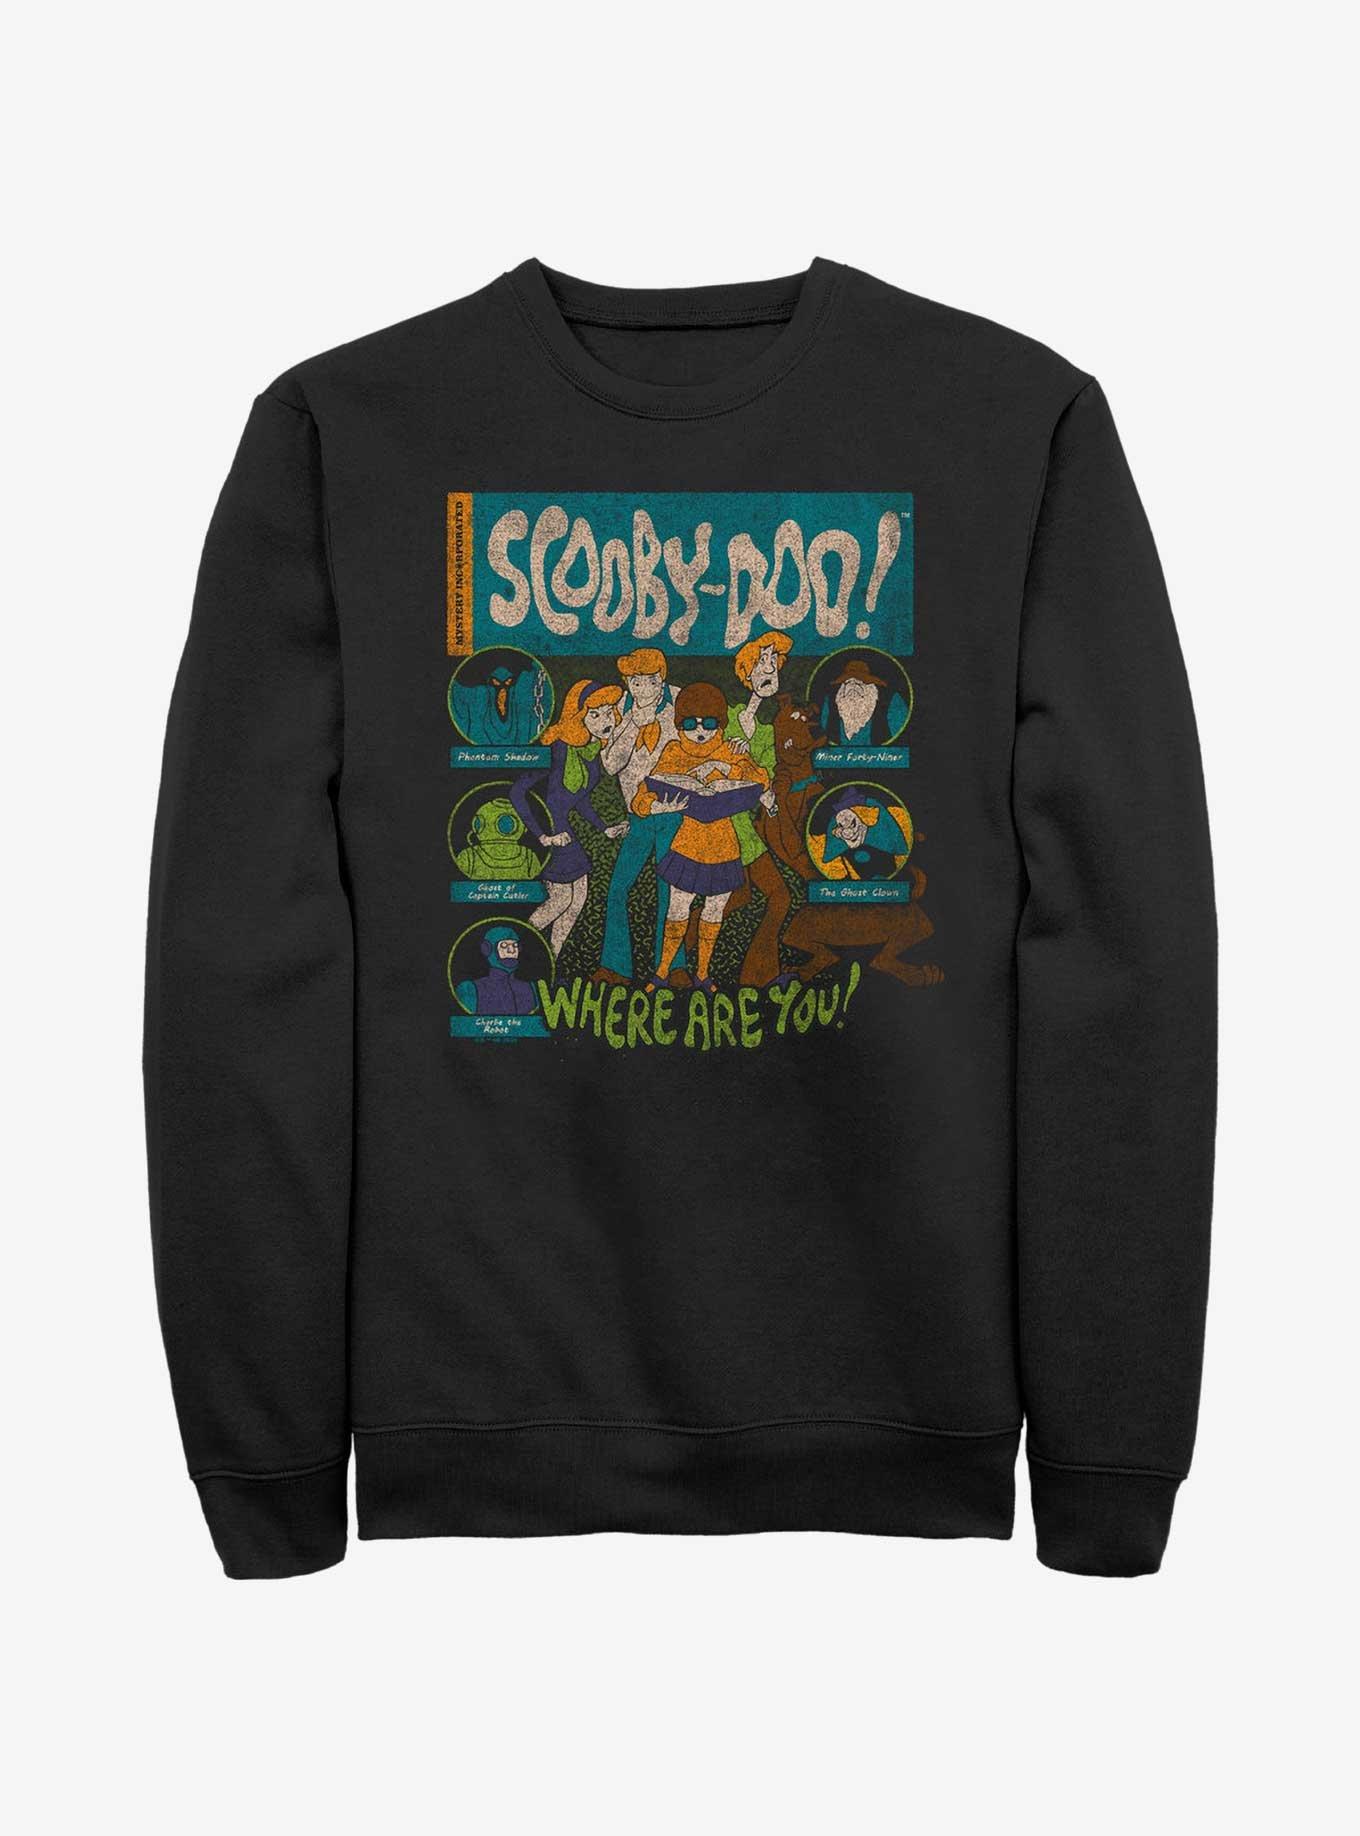 Scooby Doo Mystery Poster Sweatshirt